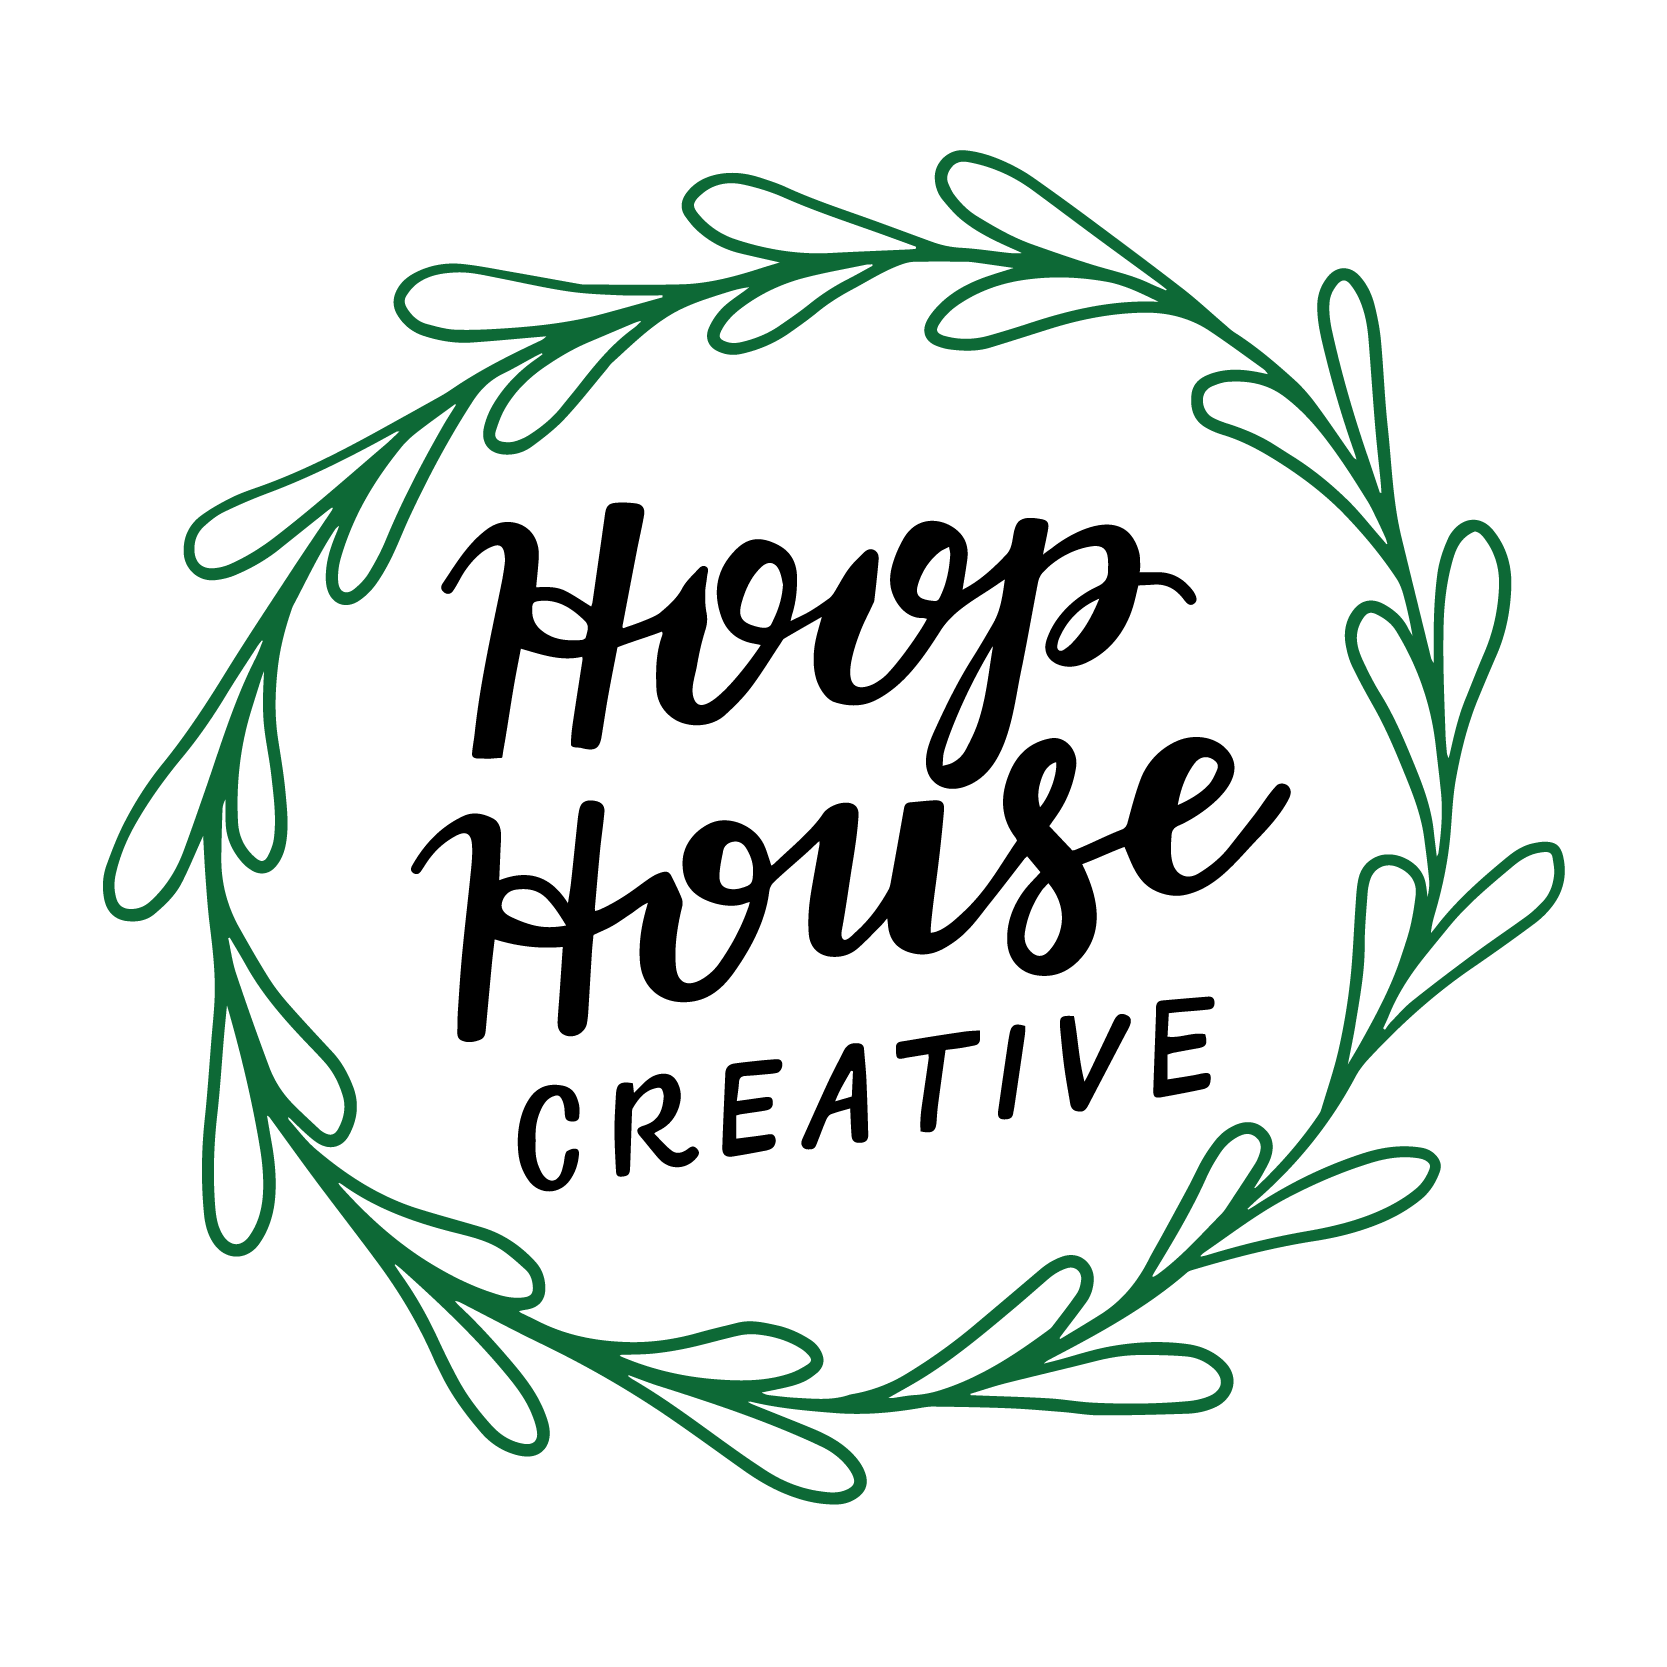 Copy of Hoop House Creative Logo Design